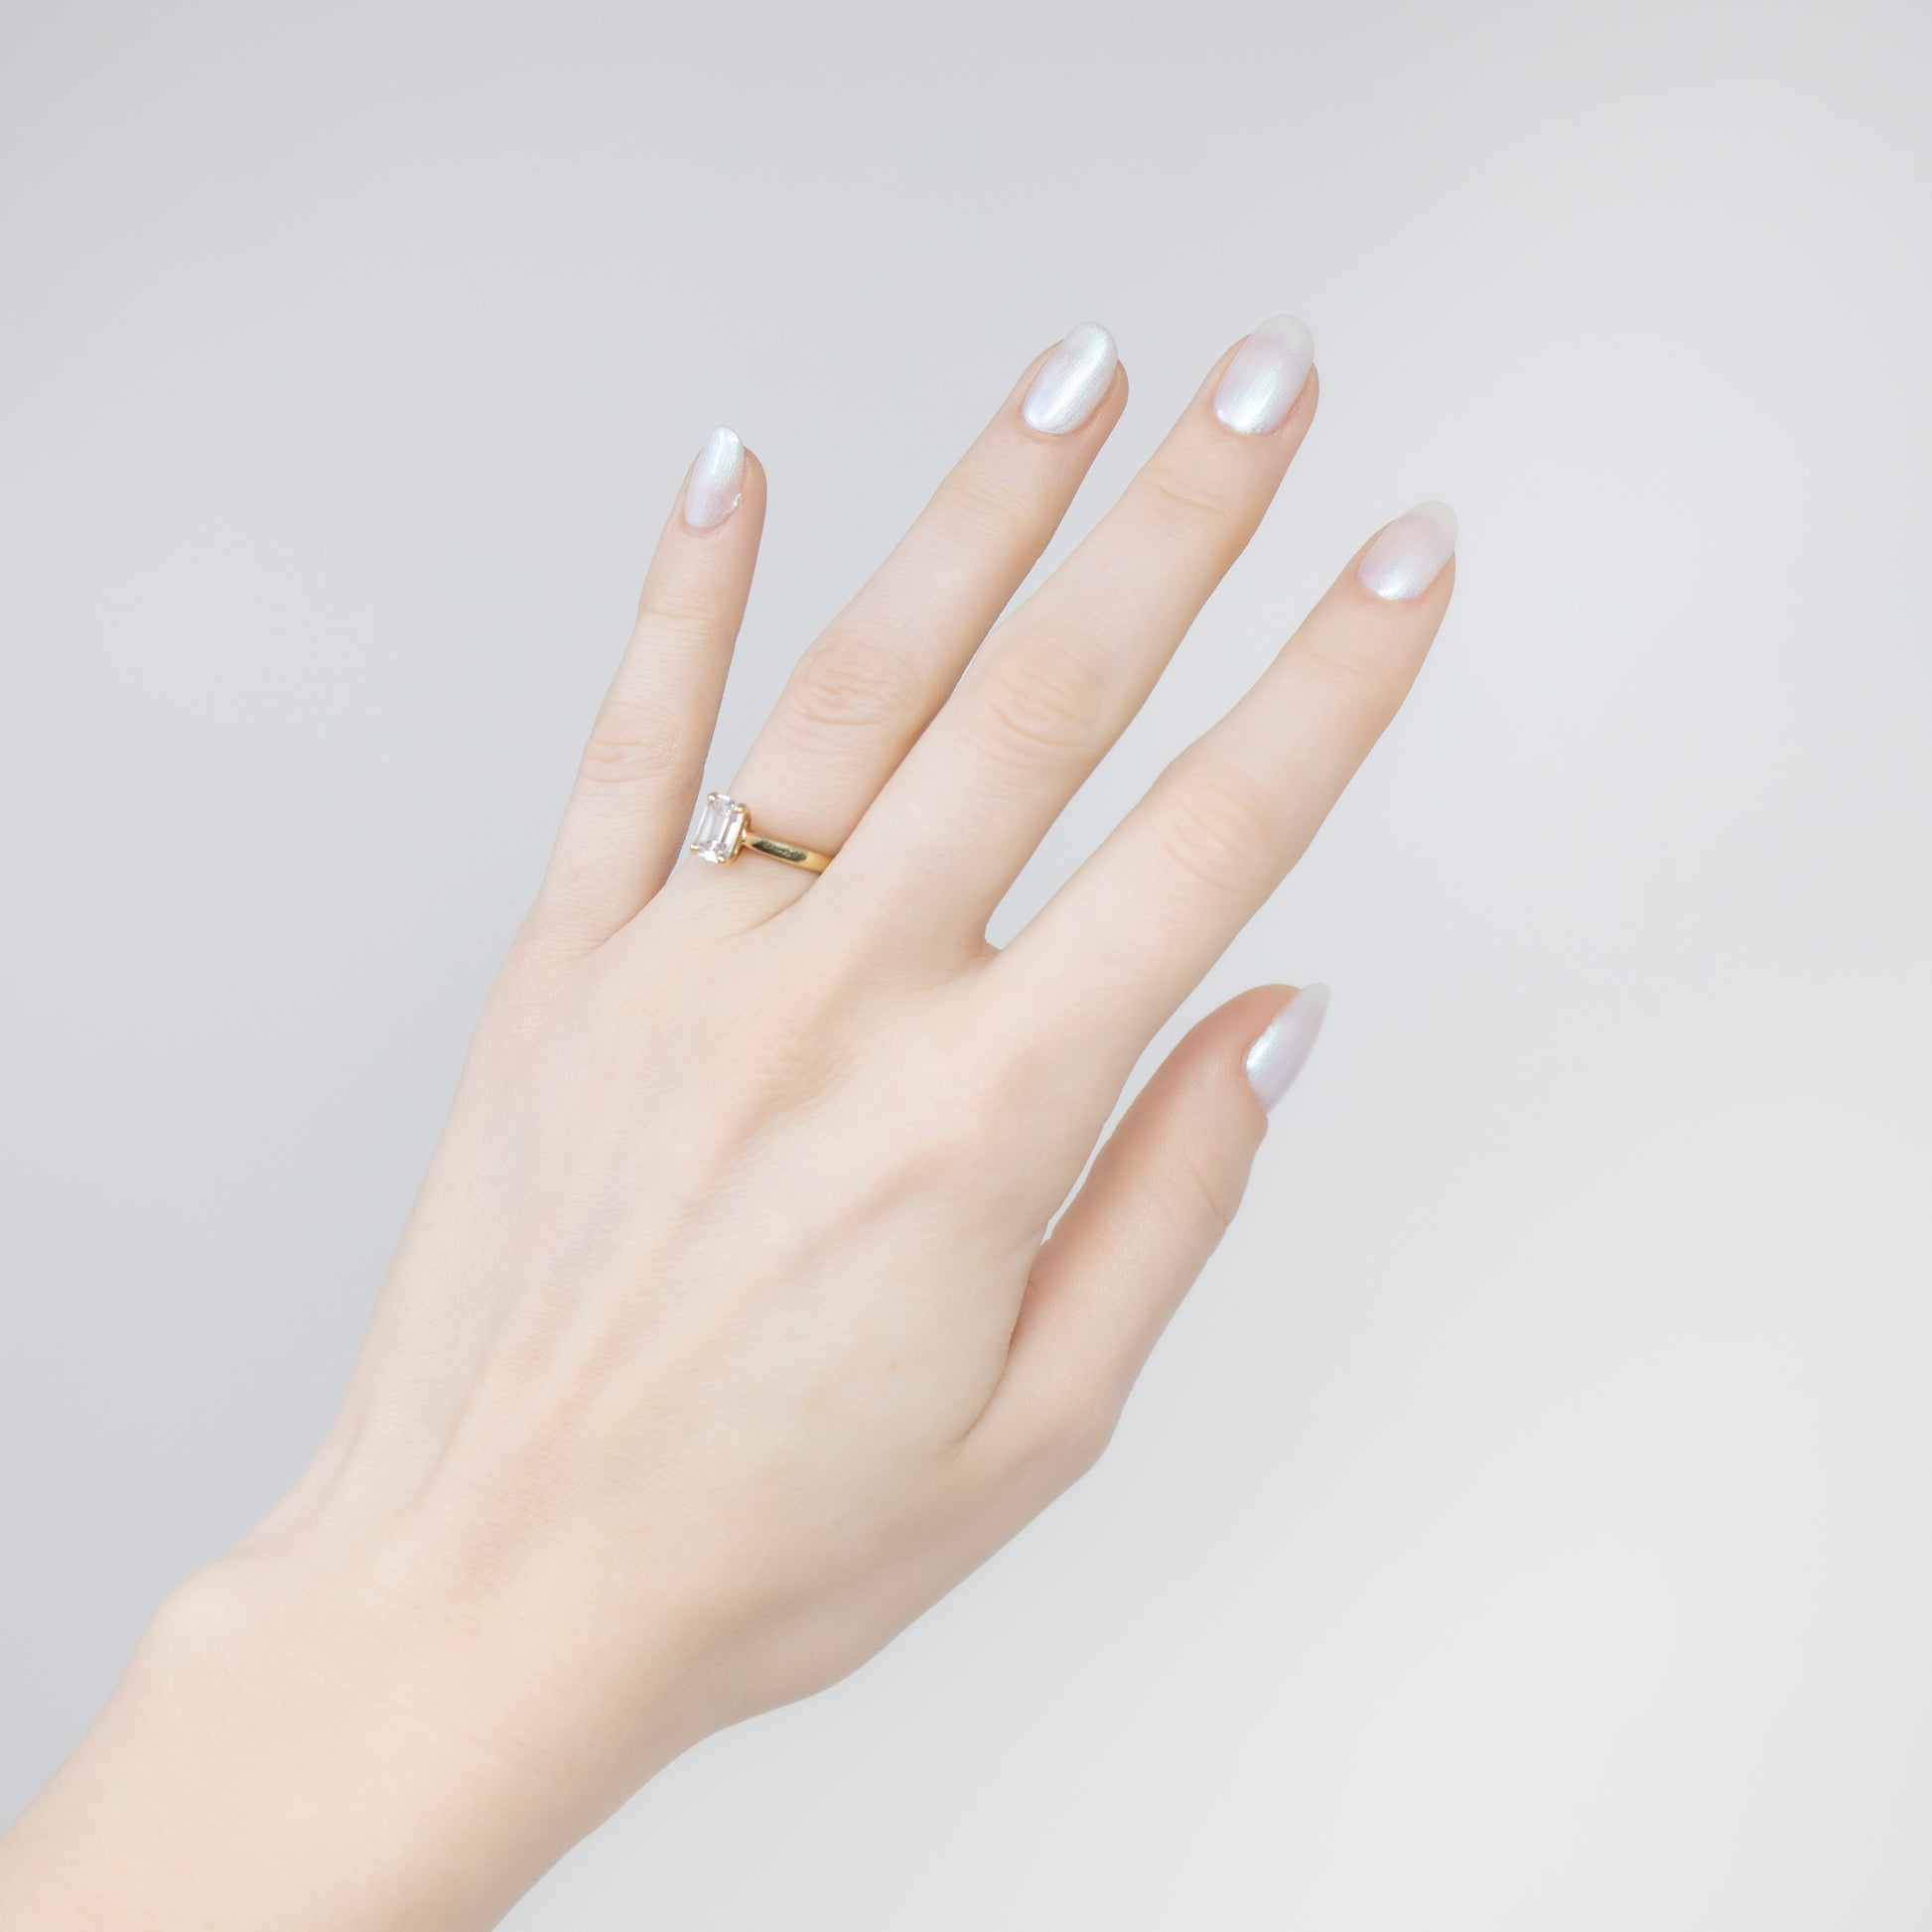 White pearl nail polish swatch on pale skin tone